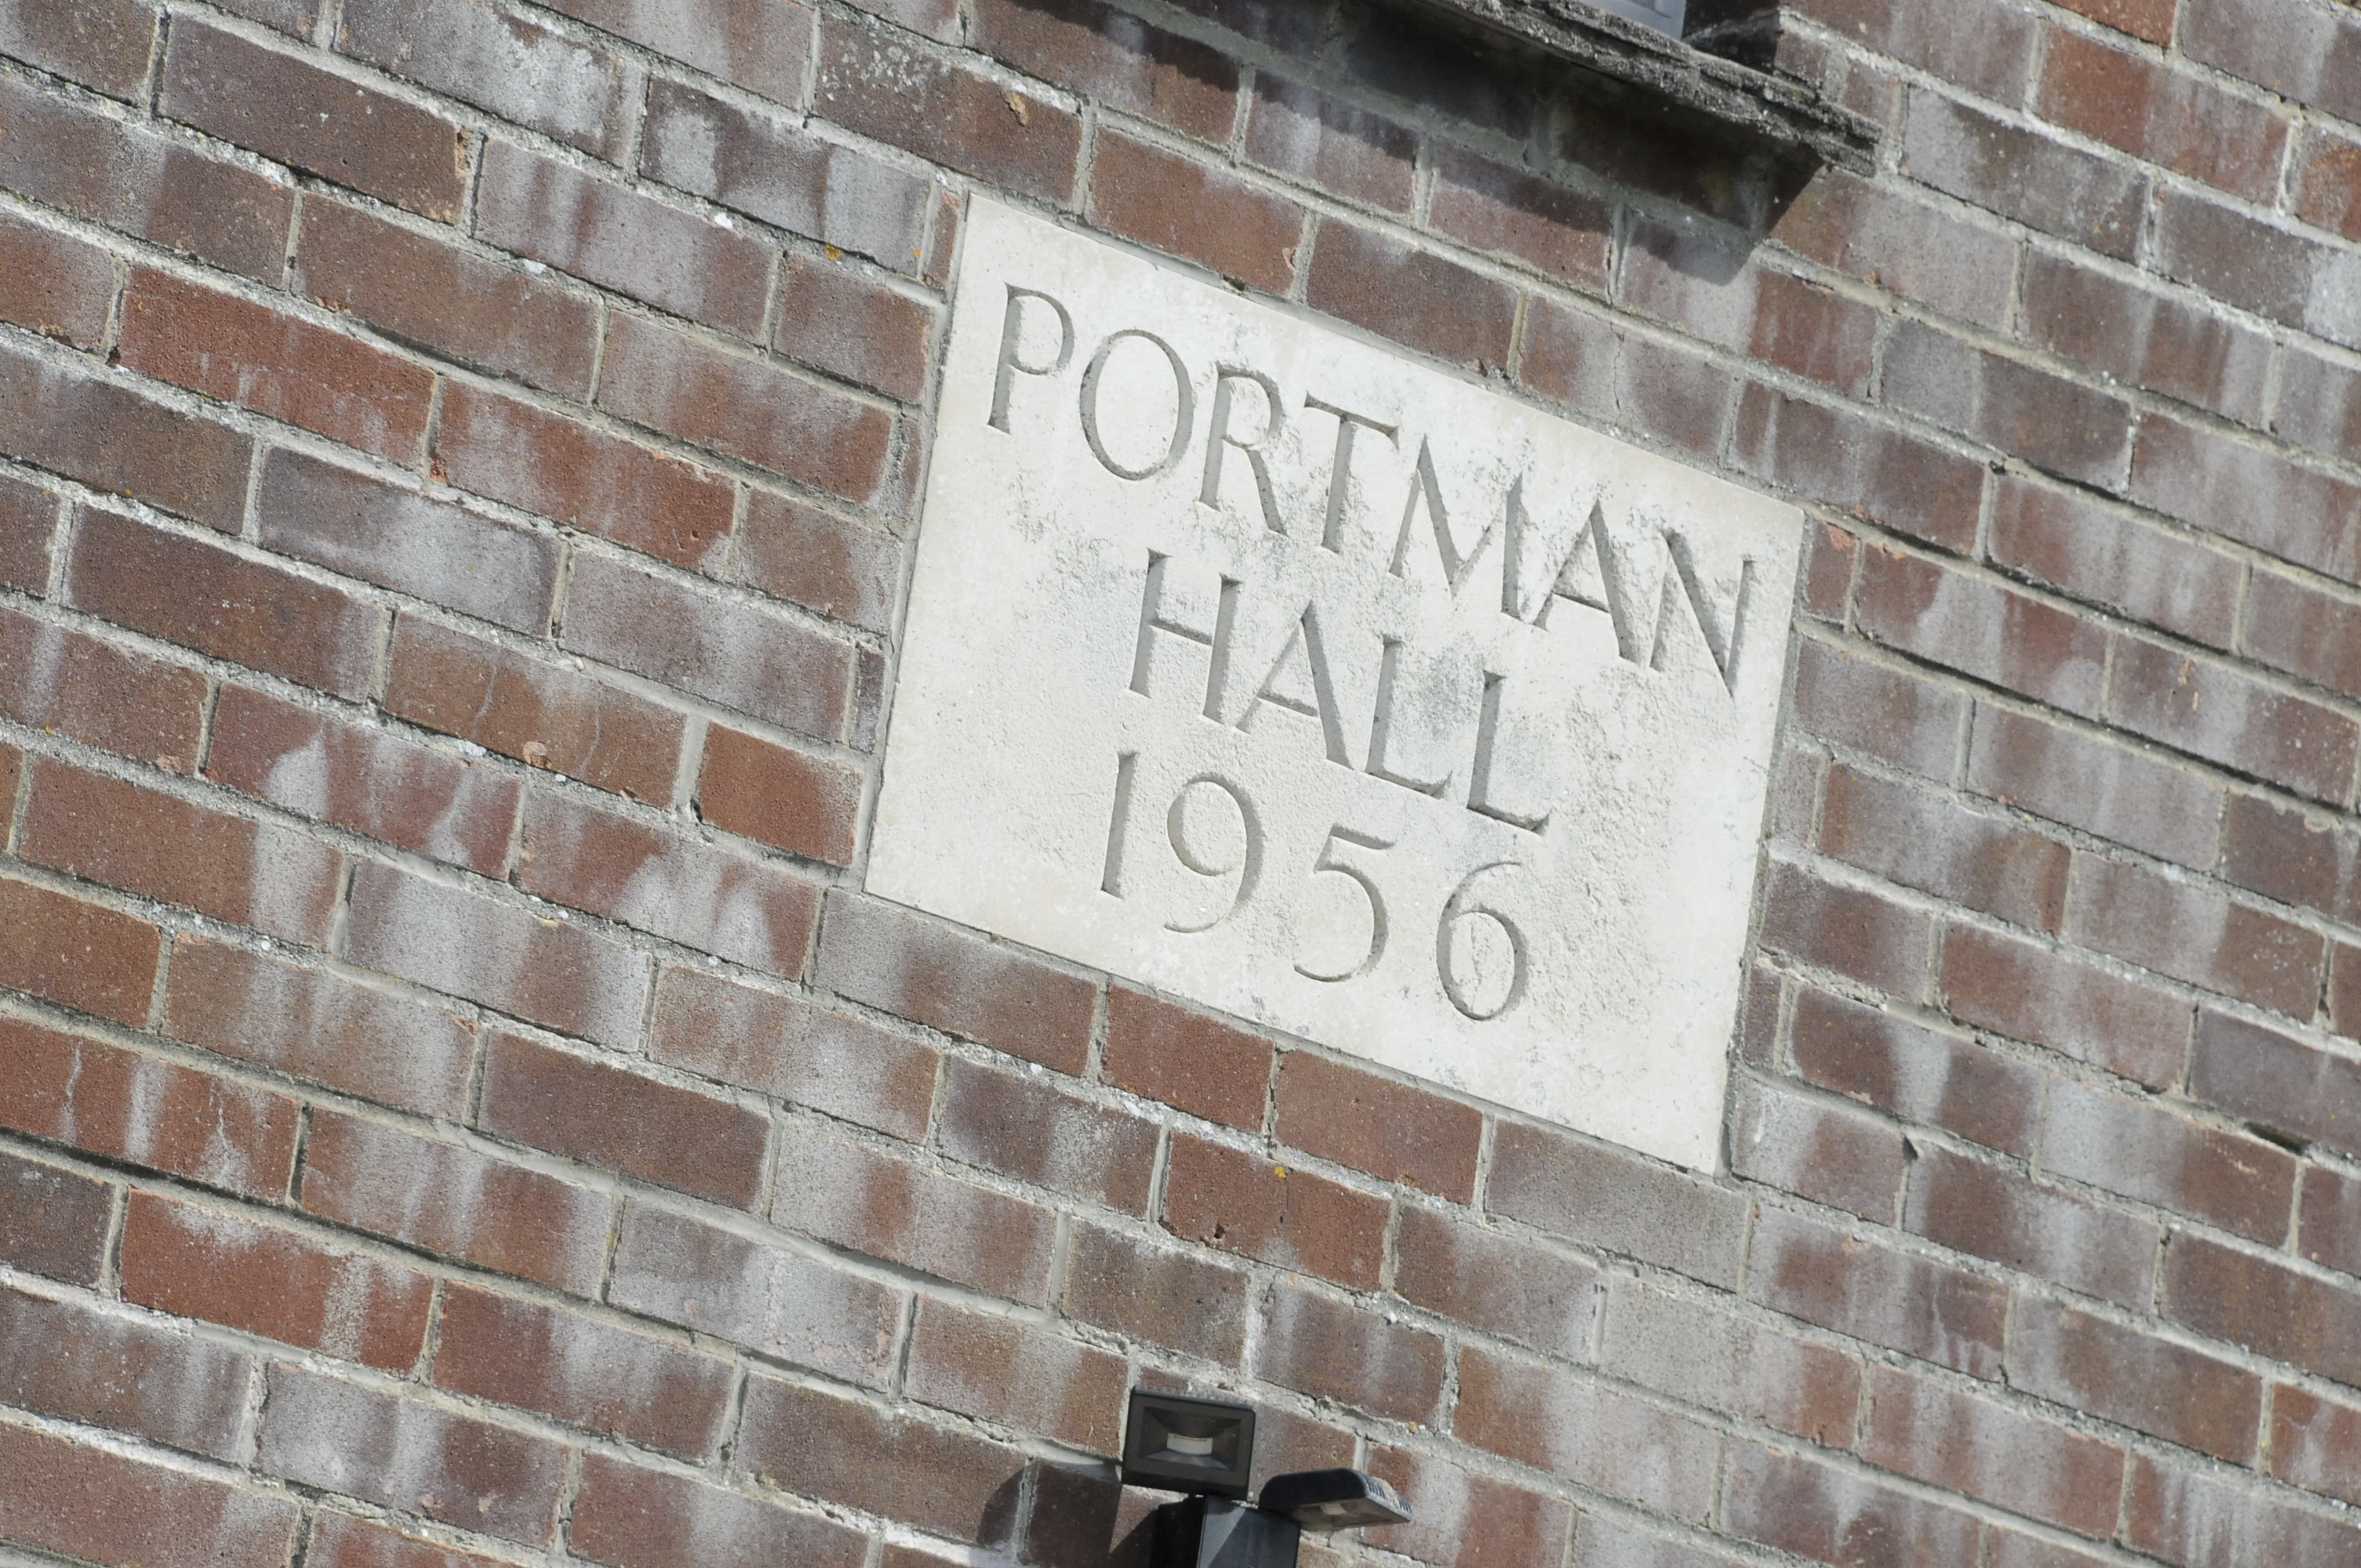 Portman Hall Sign